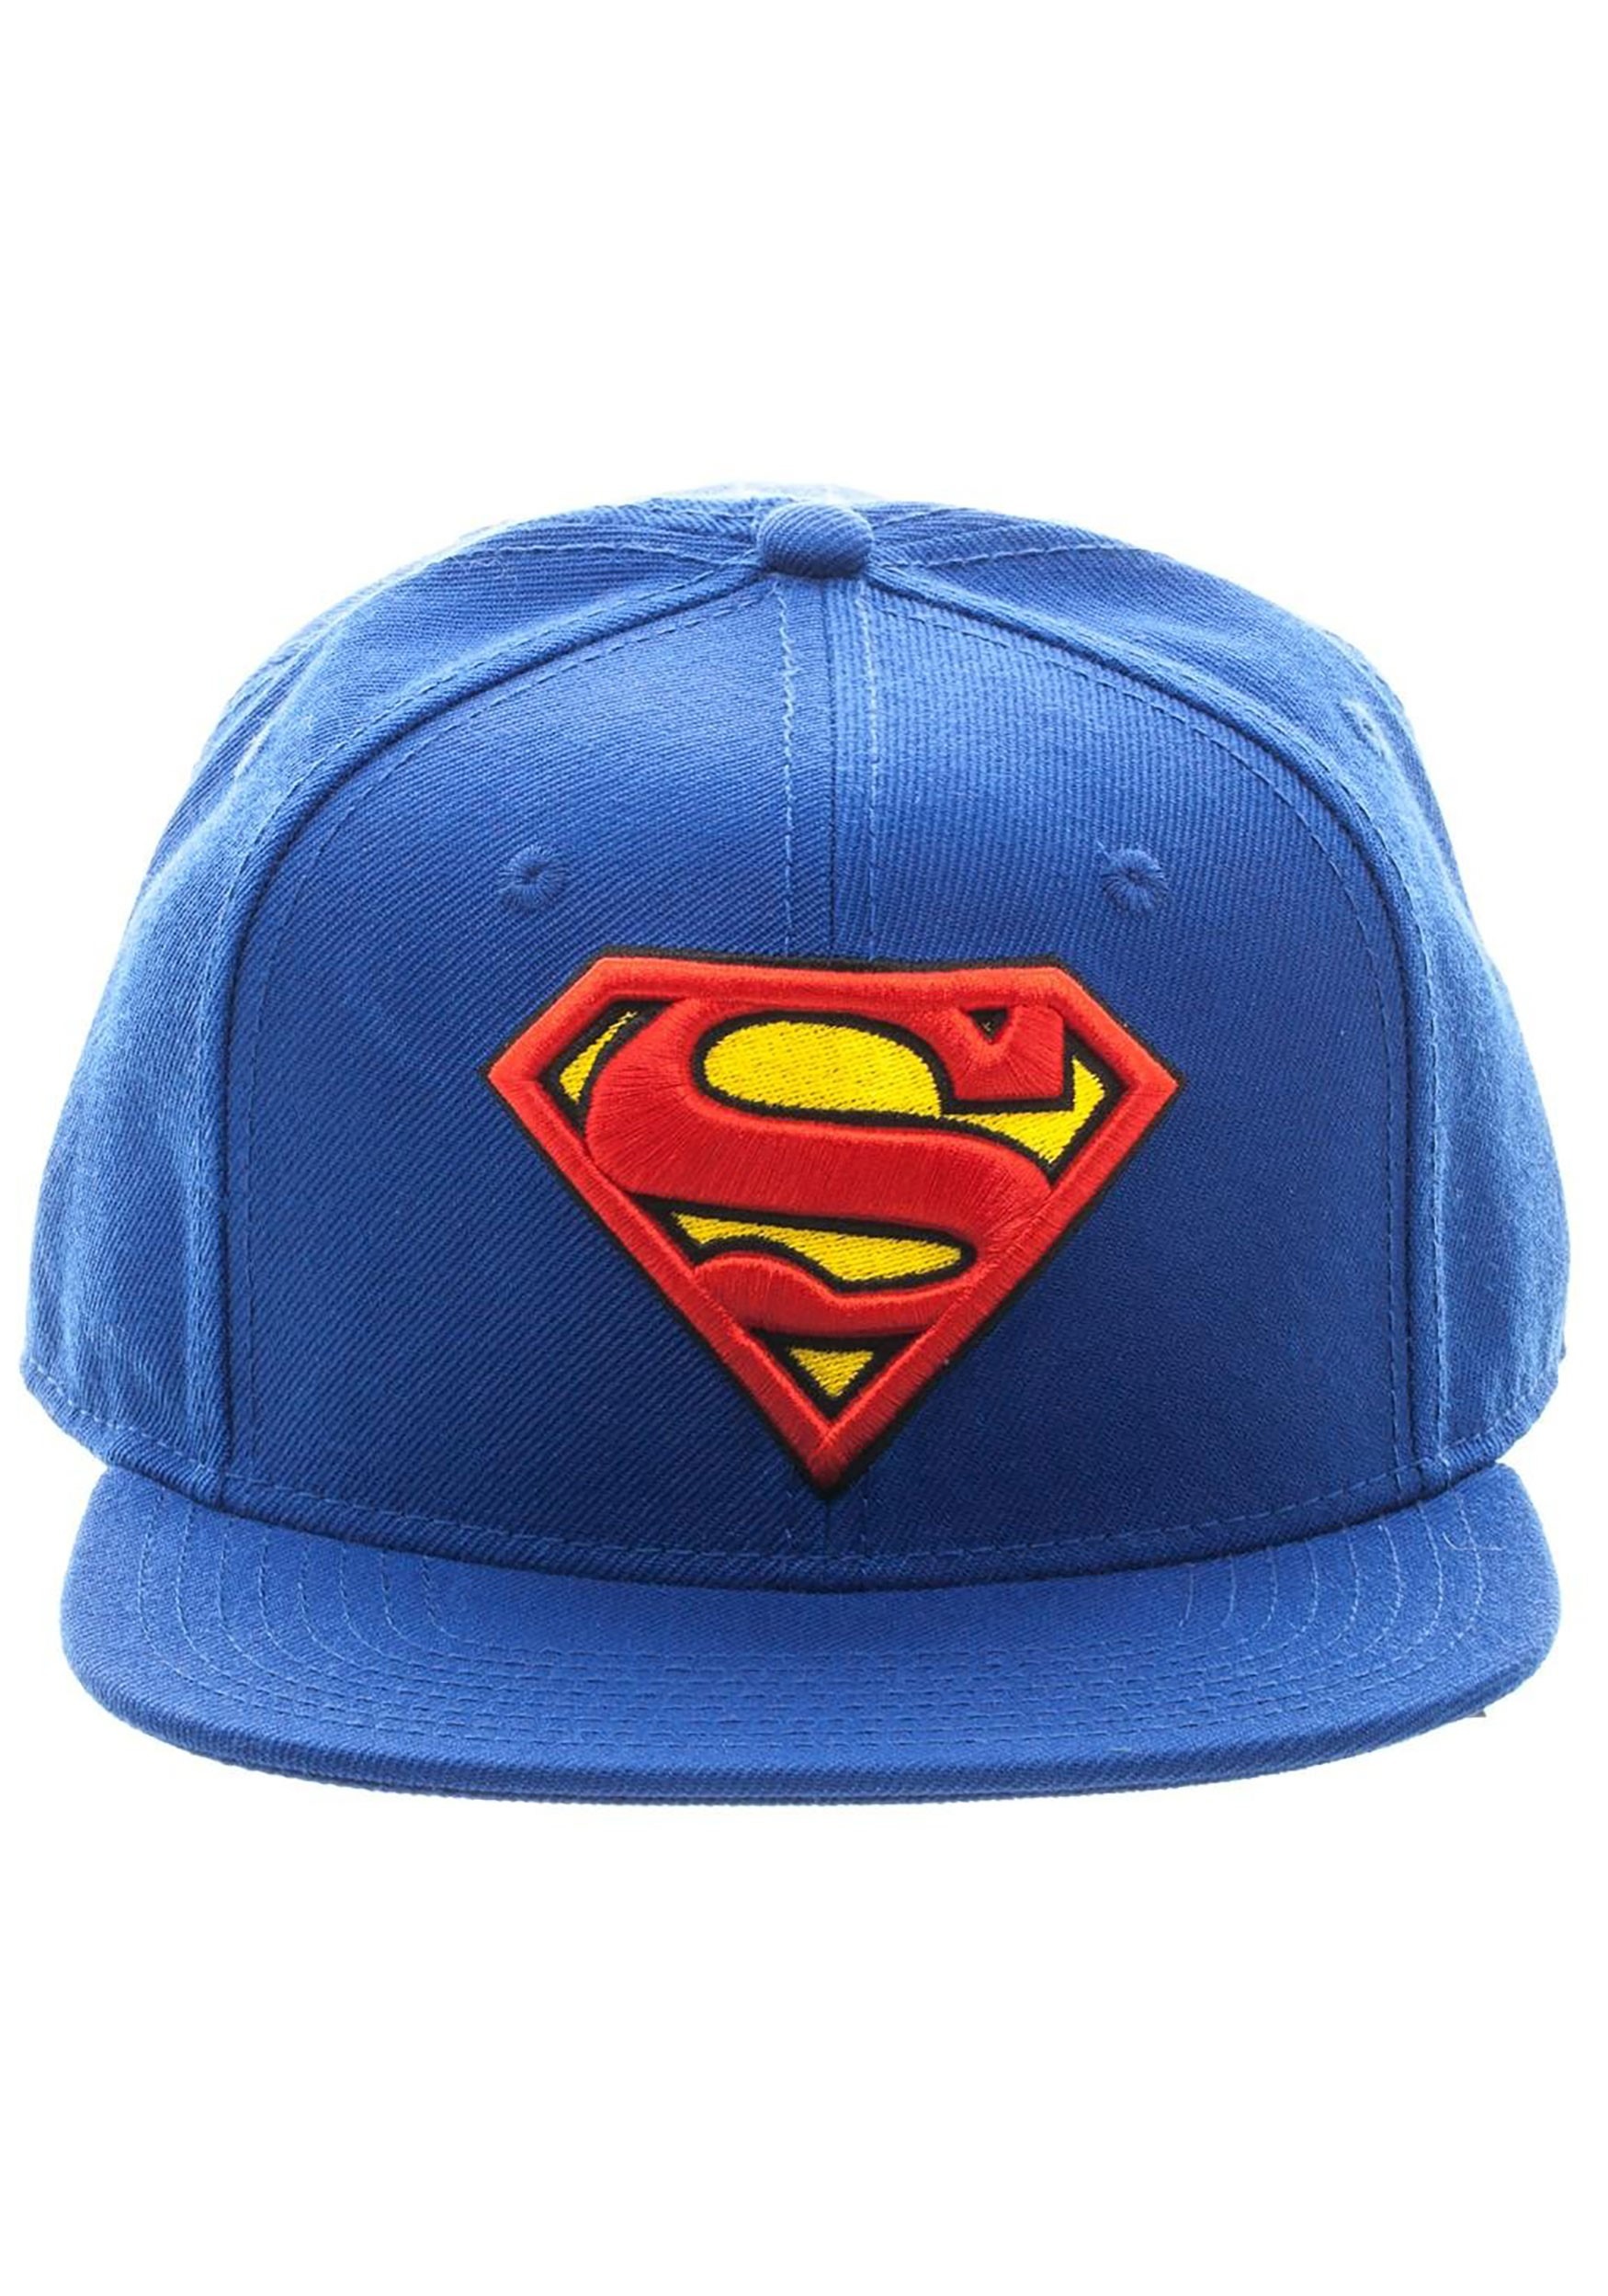 Blue Superman Snapback Hat